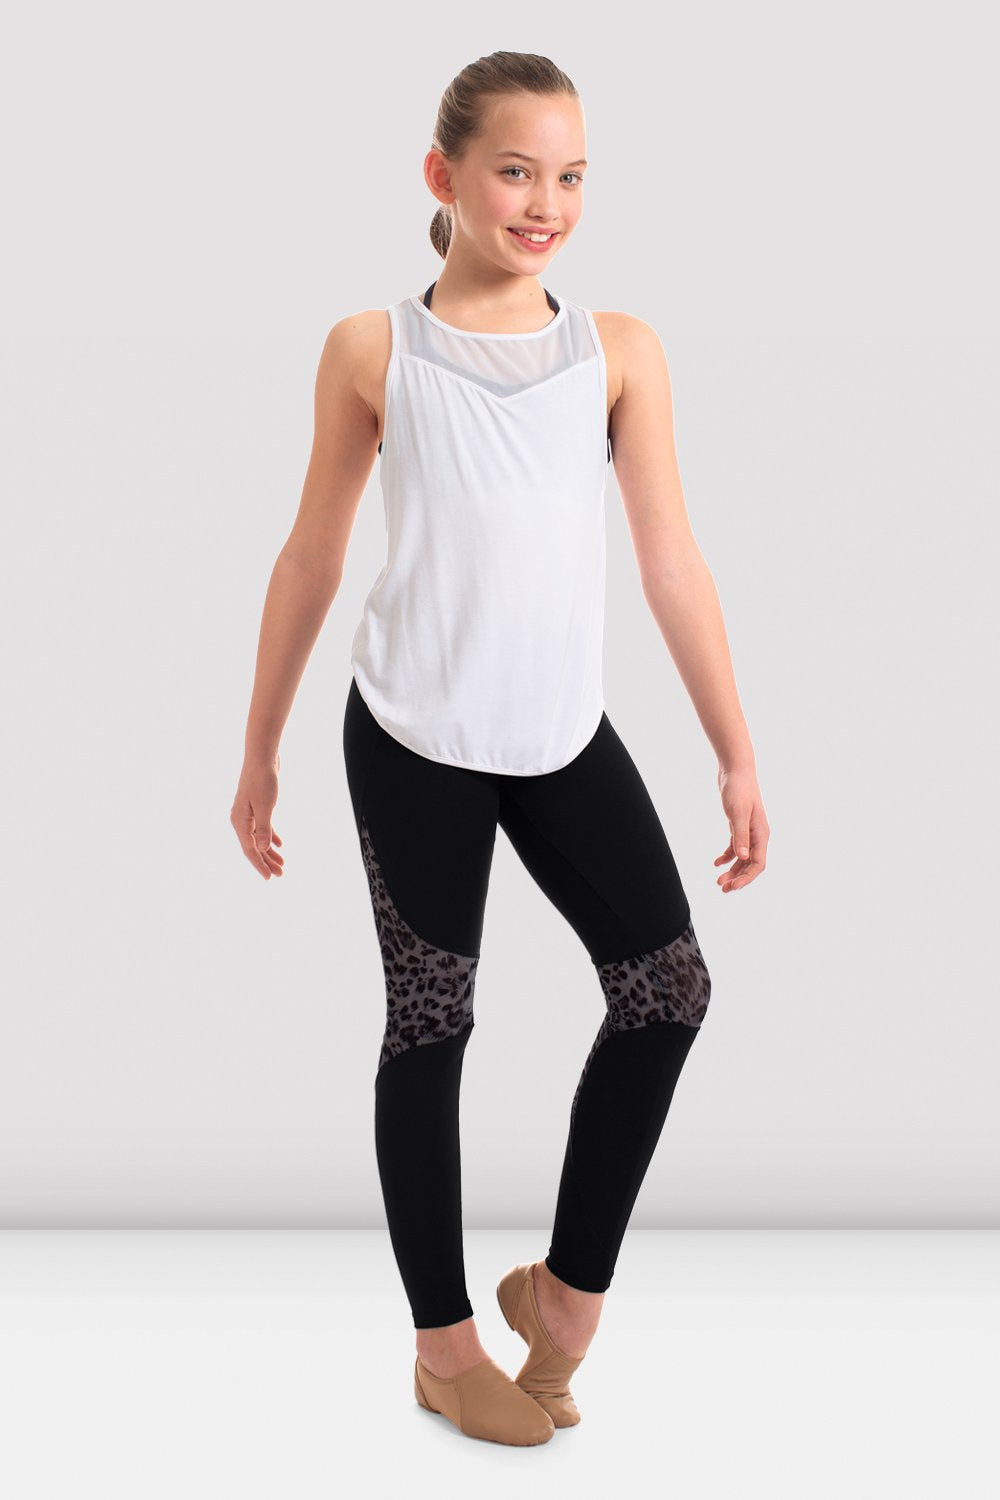 Hongchun Crop Top Athletic Shirts for Women Cute Sleeveless Yoga